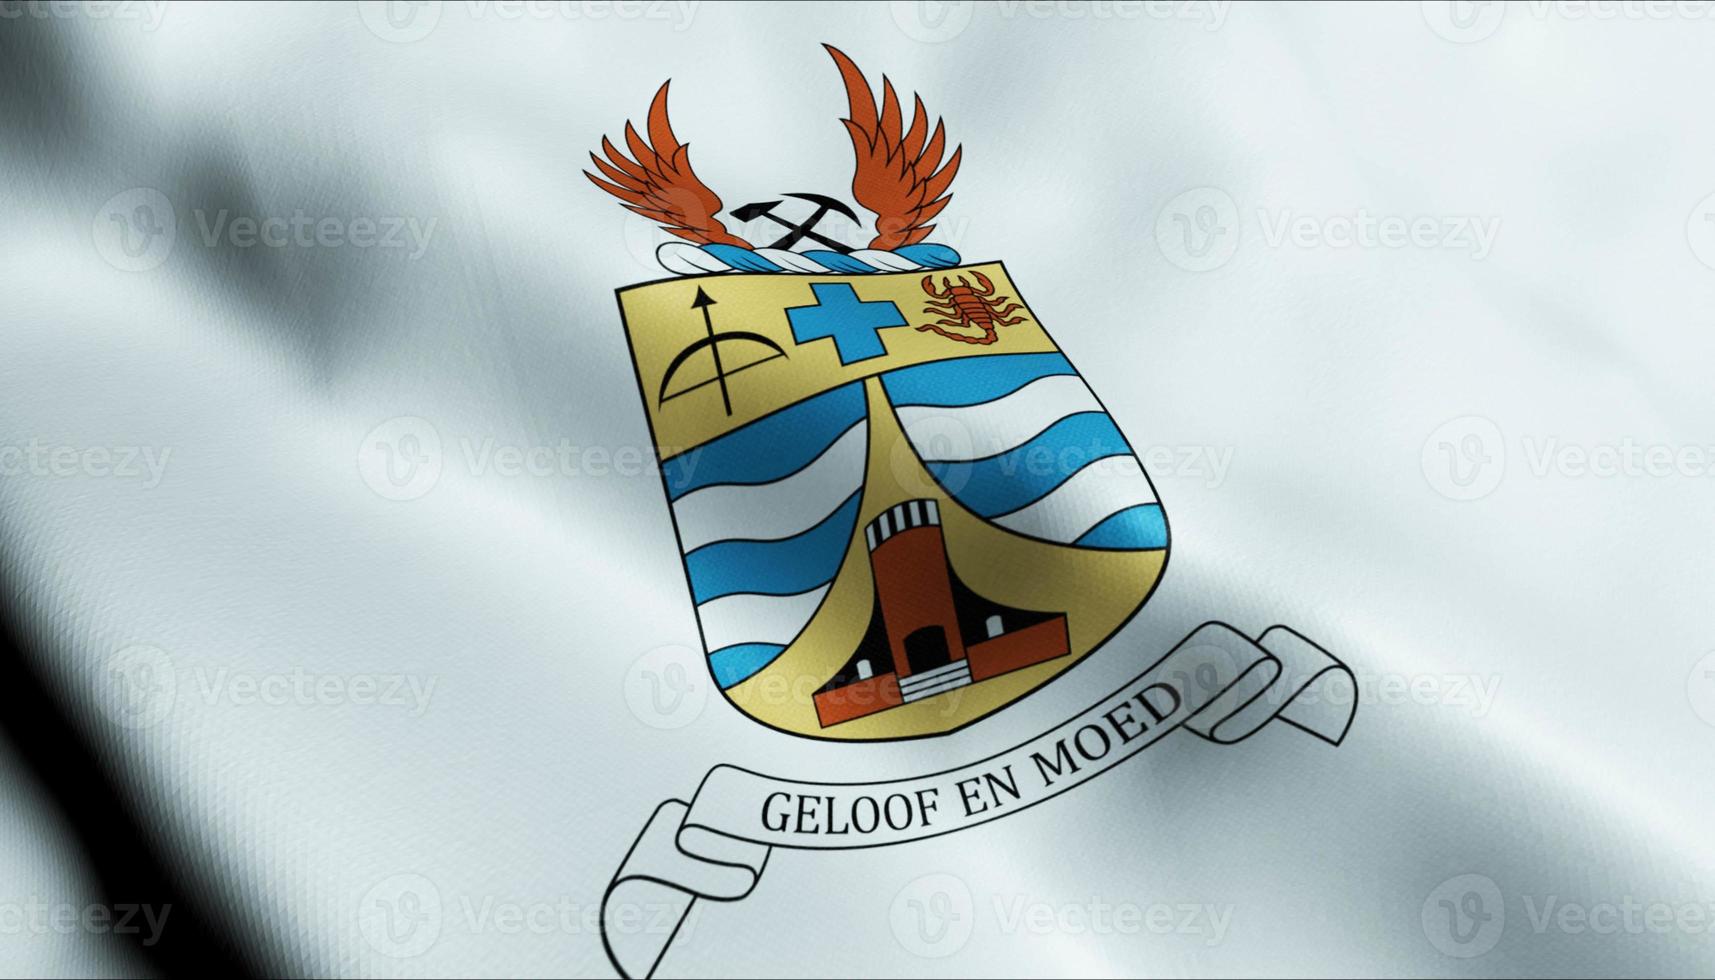 3d golvend Montenegro stad vlag van omaruru detailopname visie foto